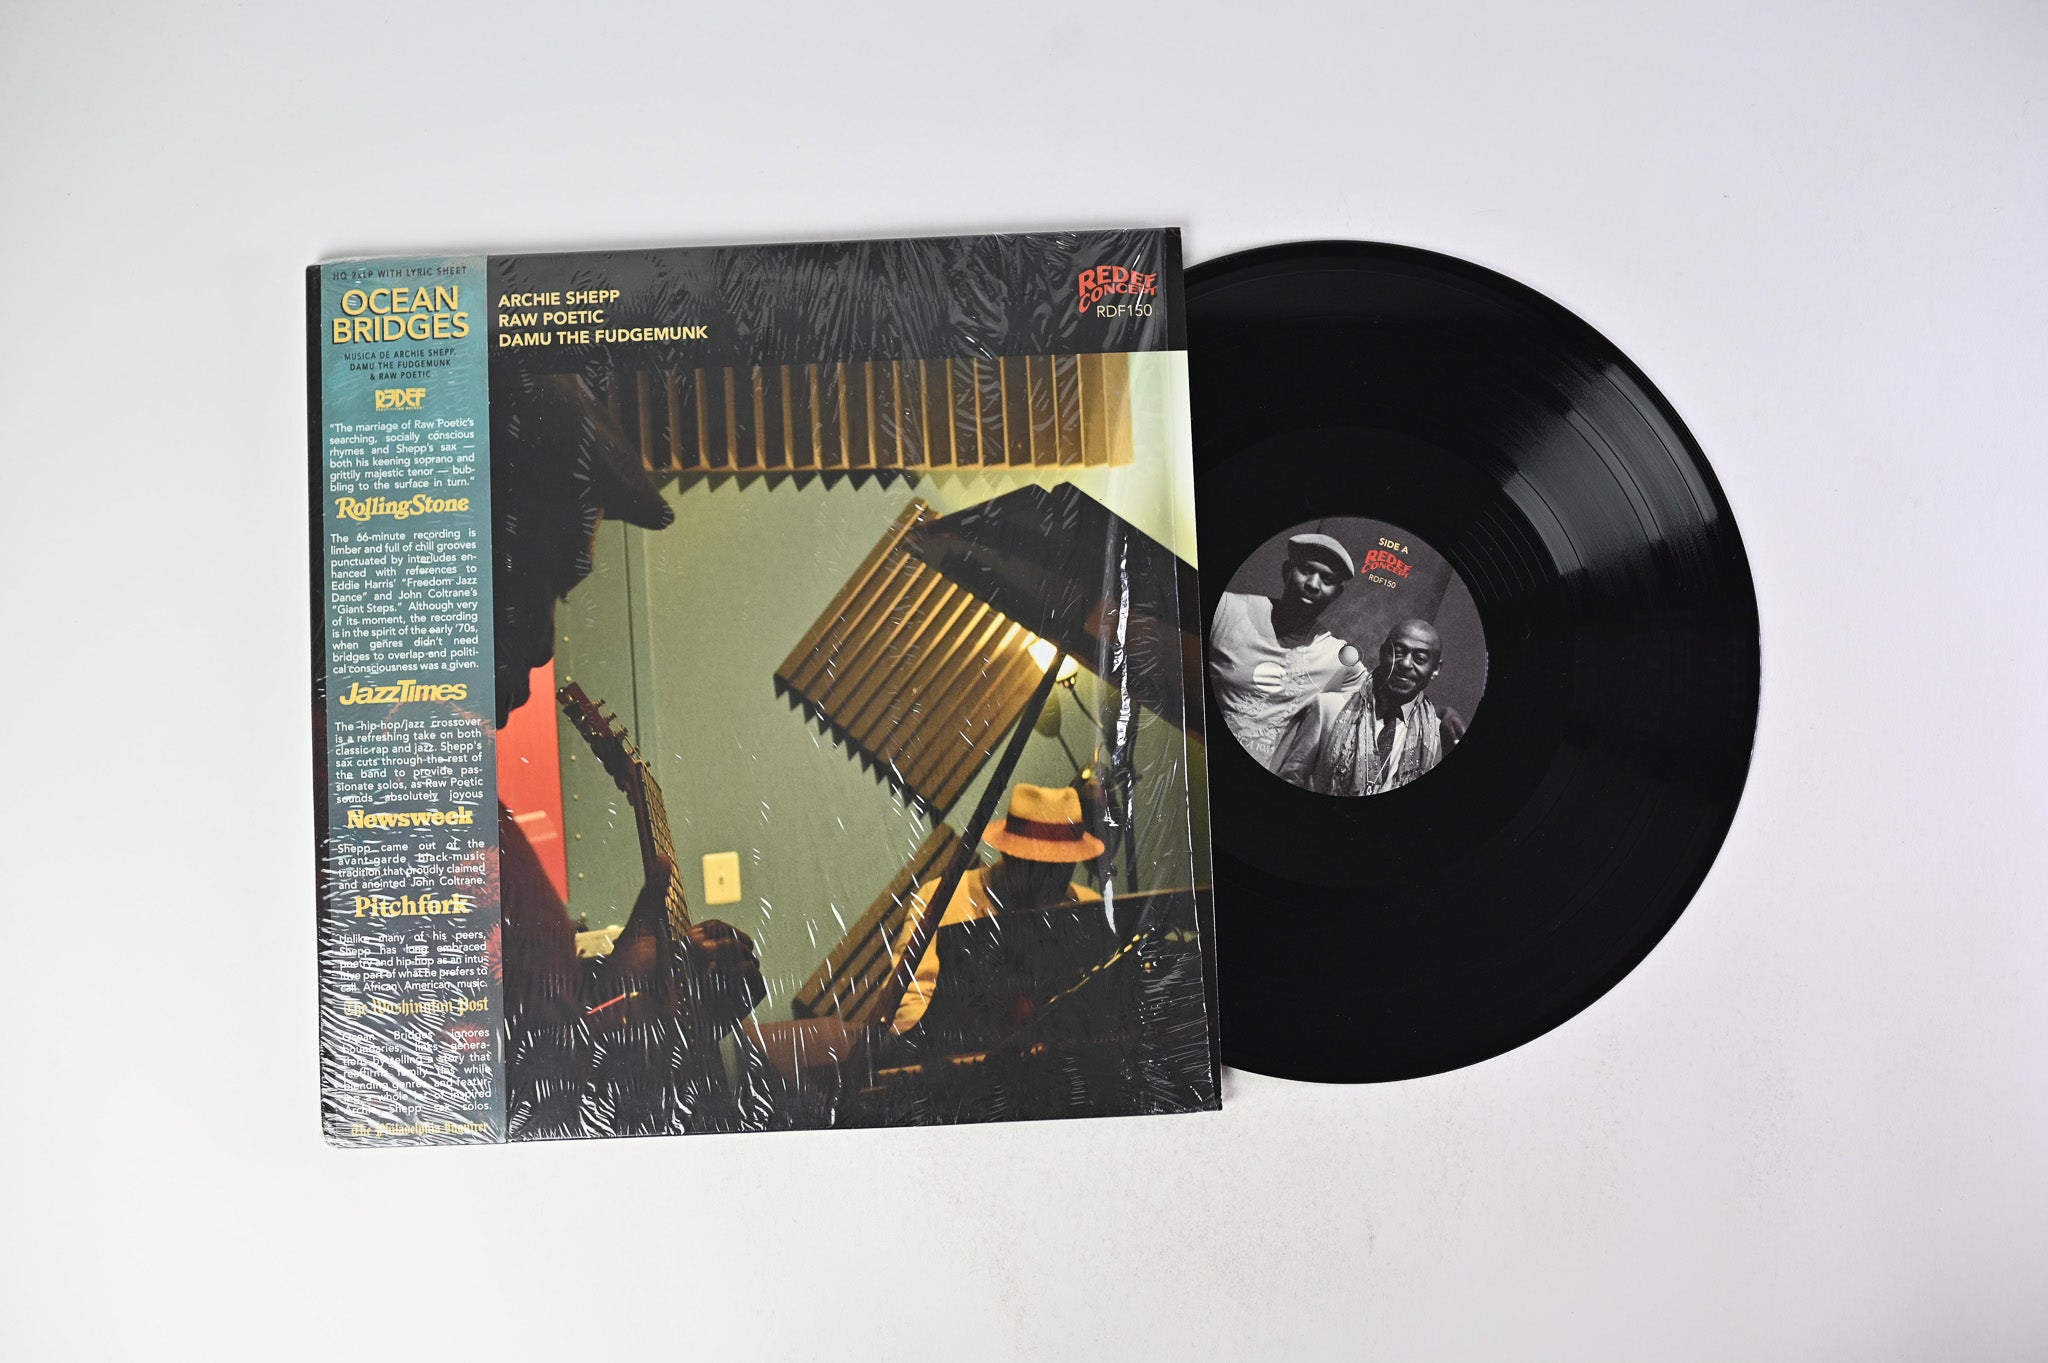 Archie Shepp - Ocean Bridges on Redefinition Records